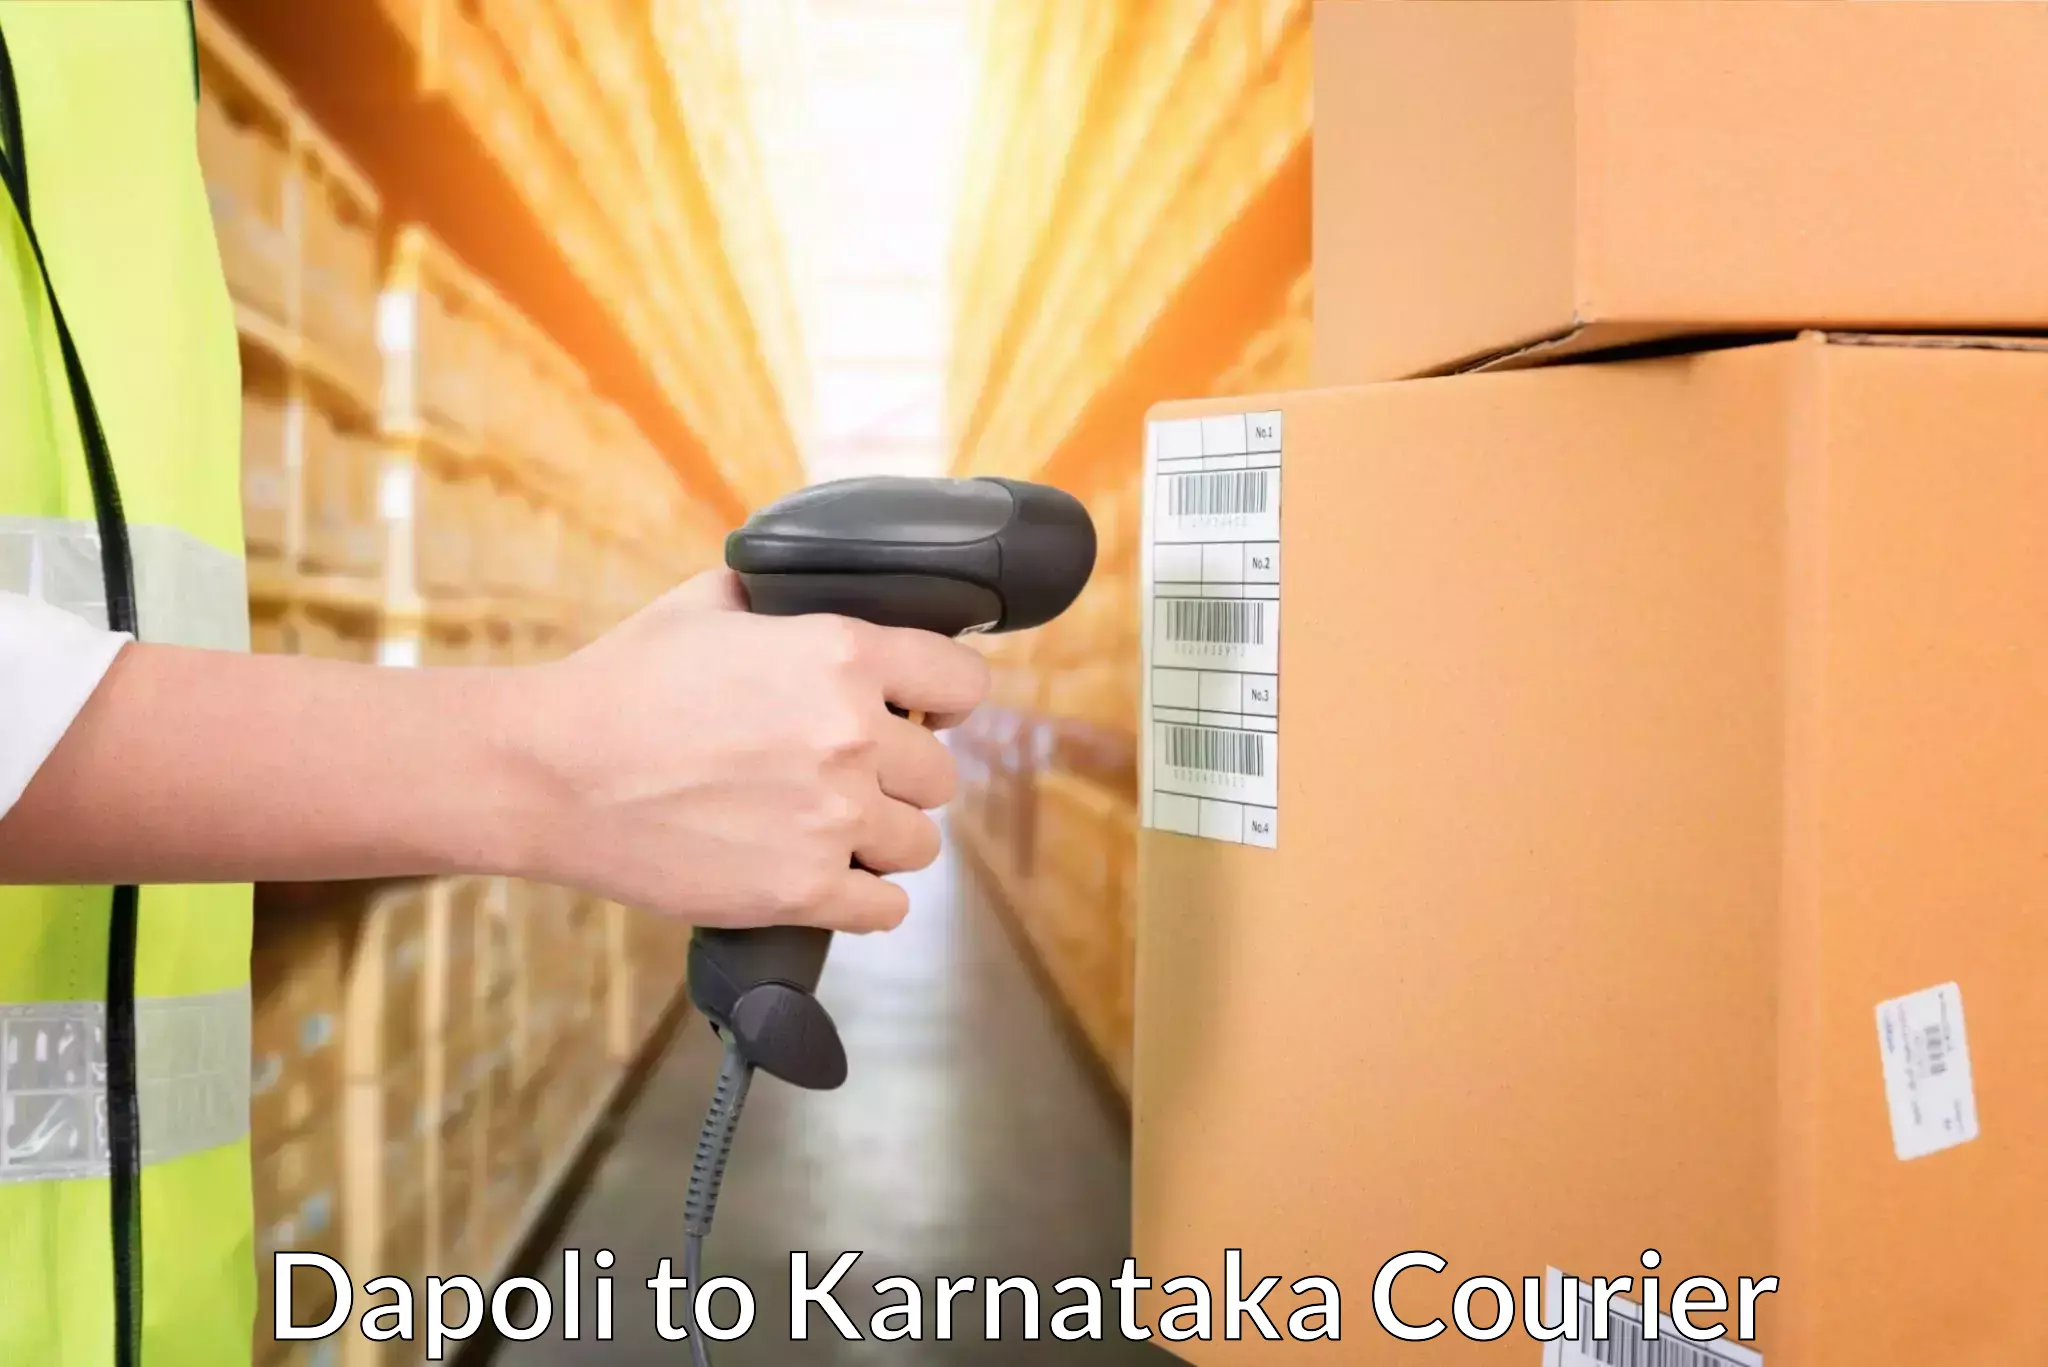 Package delivery network Dapoli to Karnataka